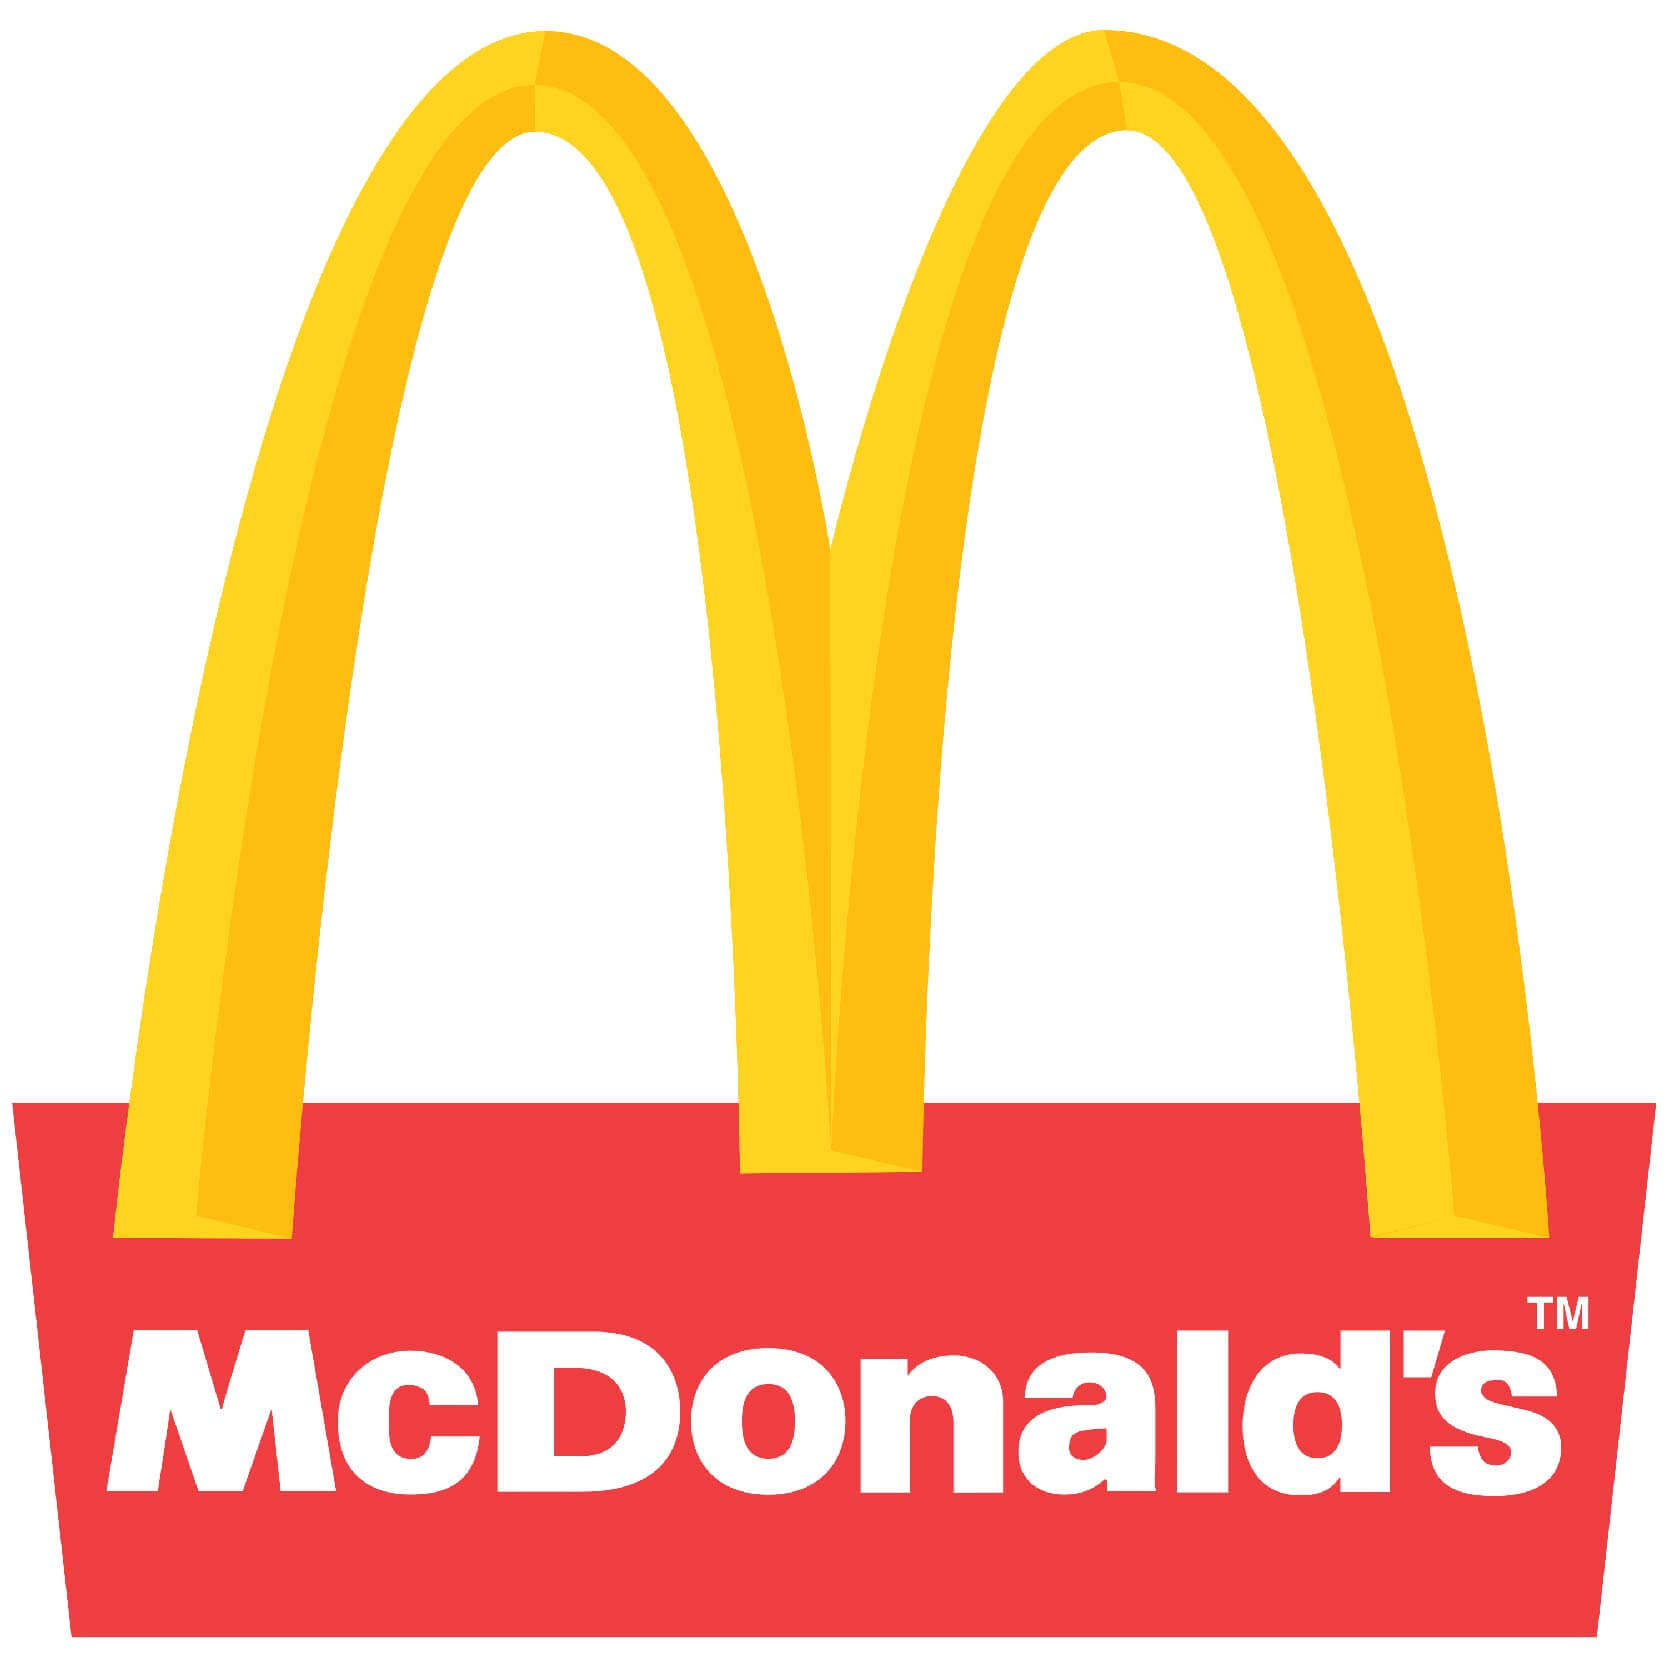 necessities for family - McDonald's